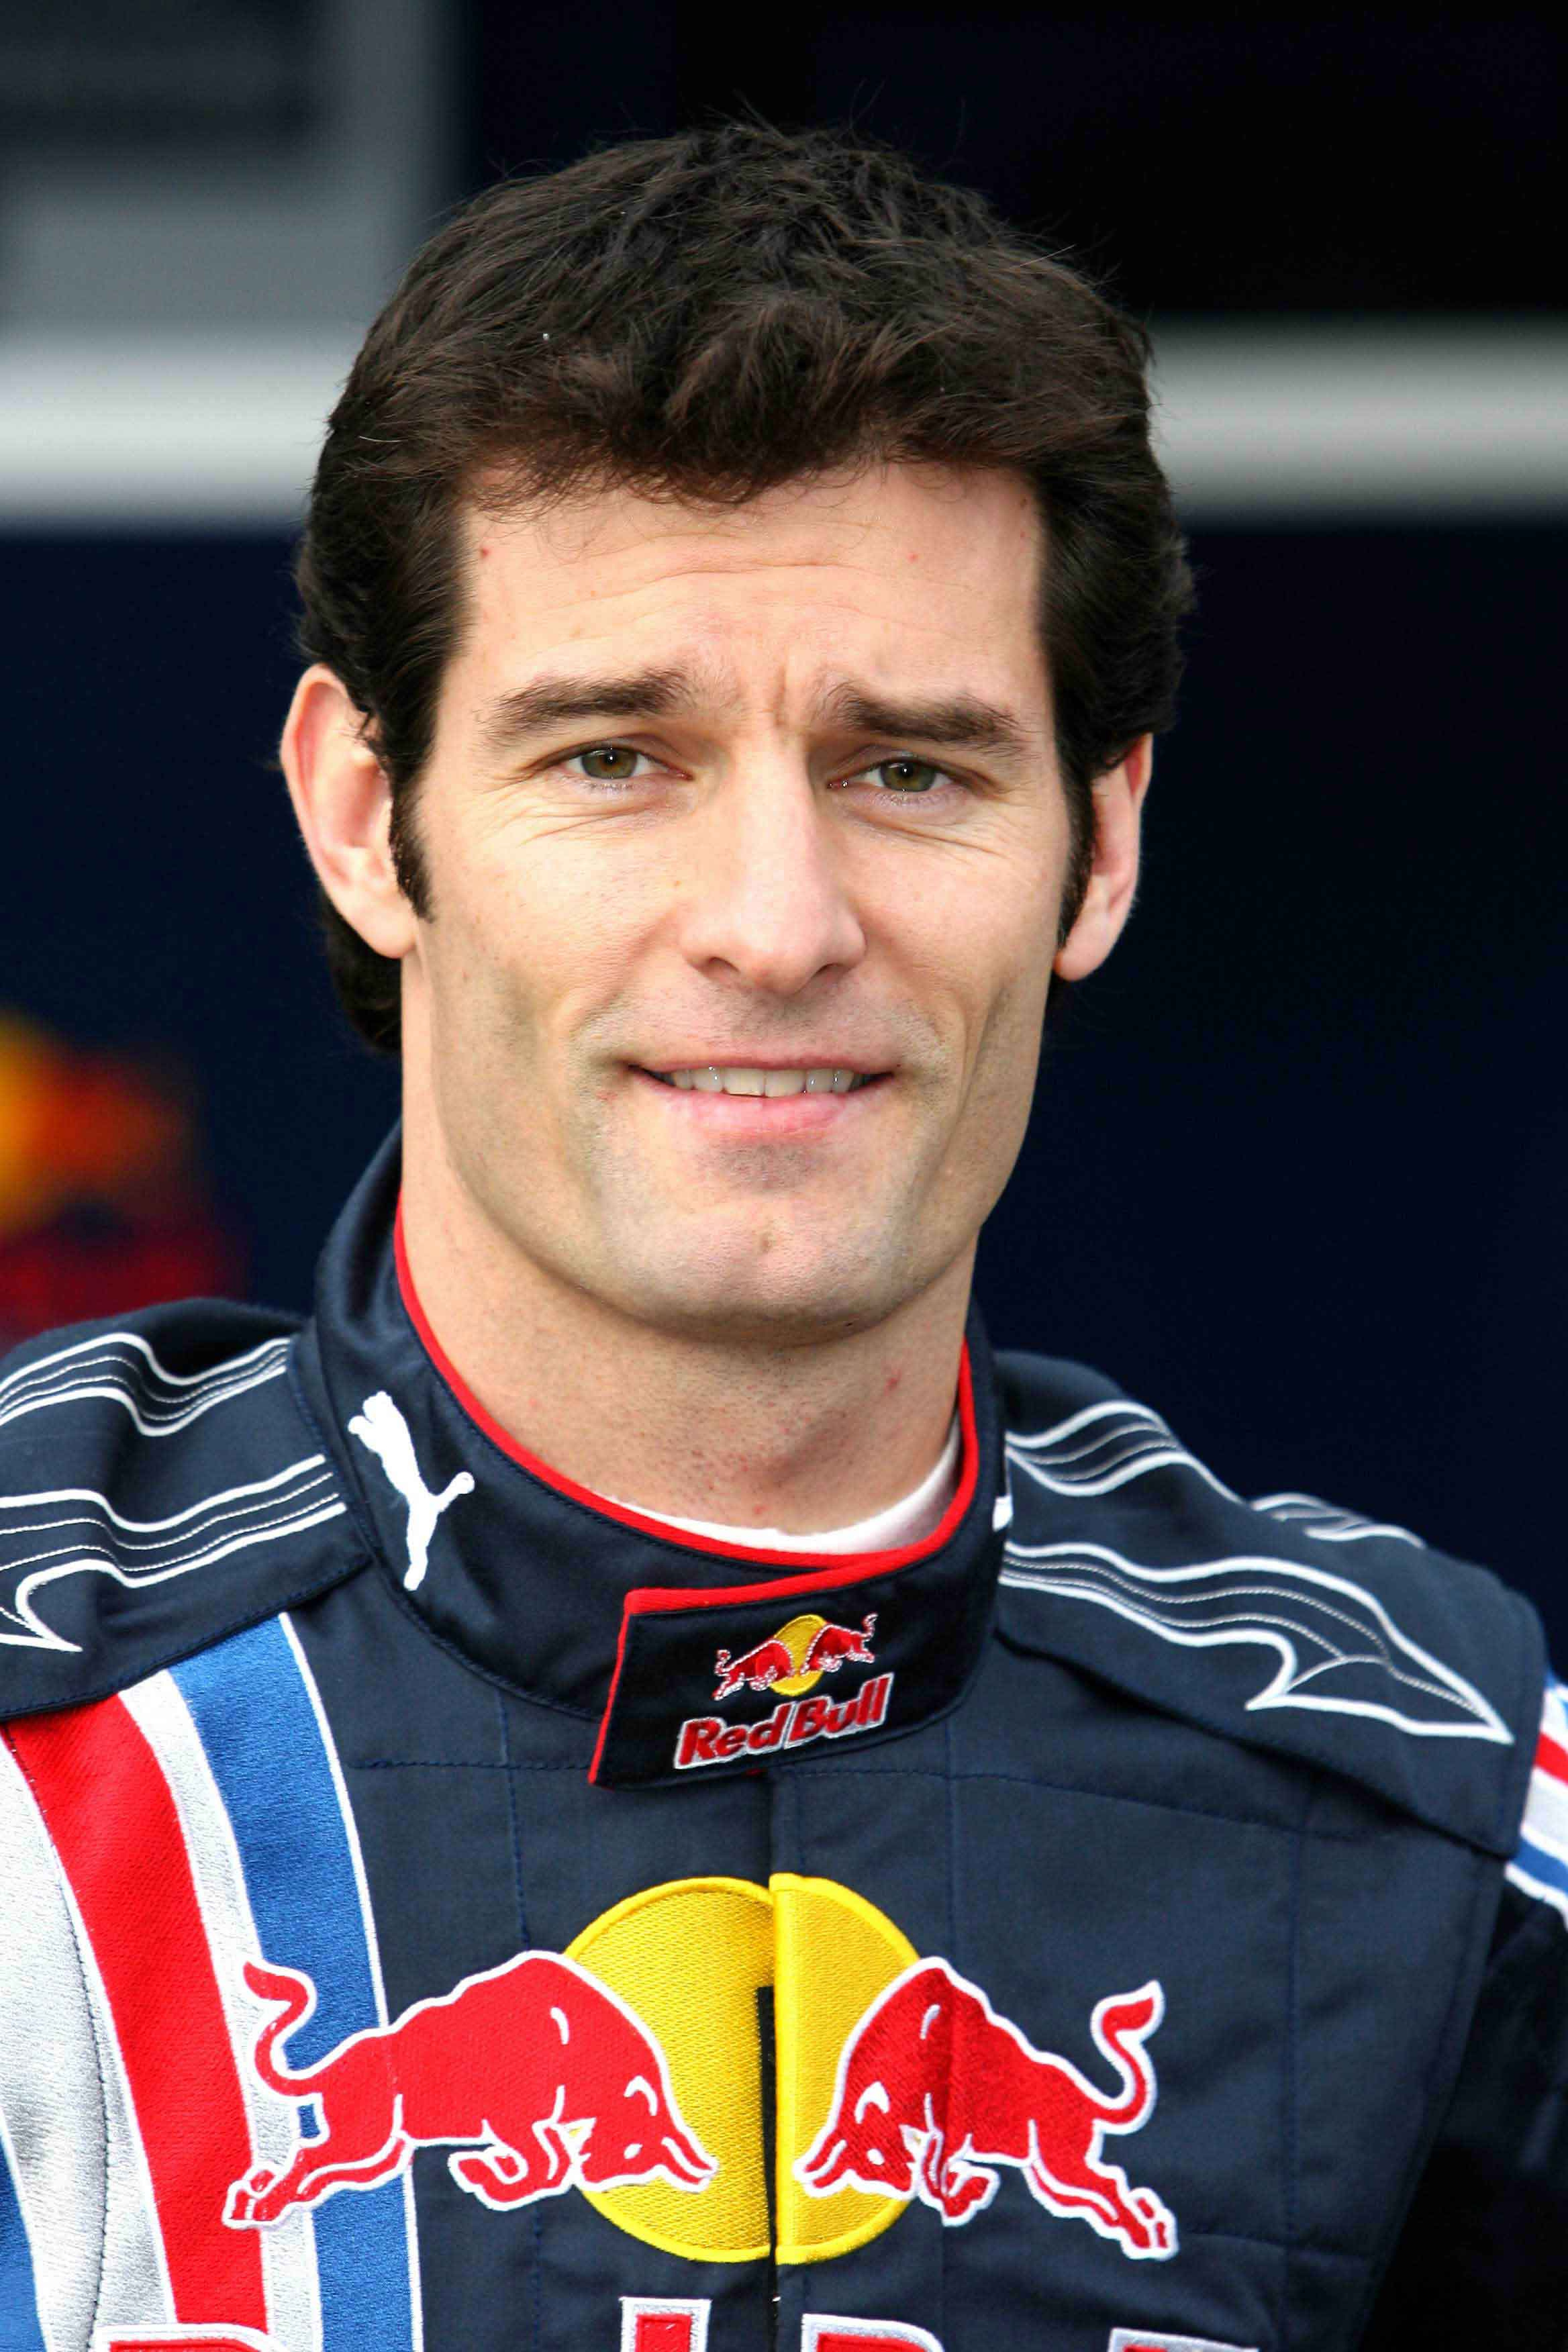 ¿Cuánto mide Mark Webber? Mark-webber-2